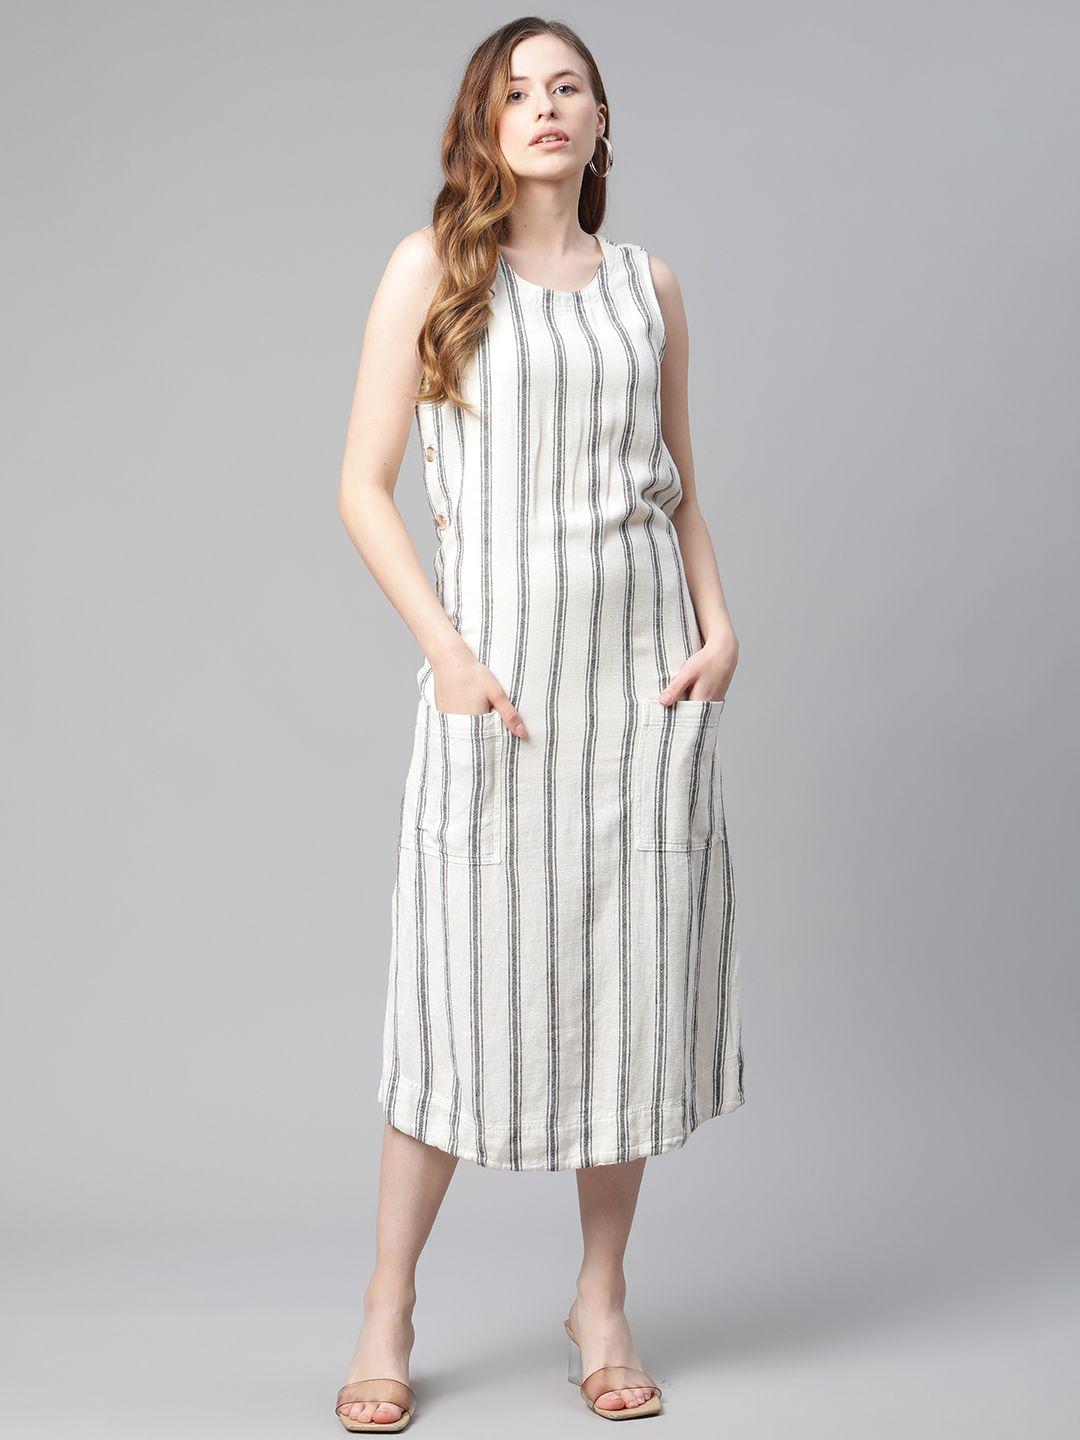 marks & spencer off white & black striped a-line midi dress